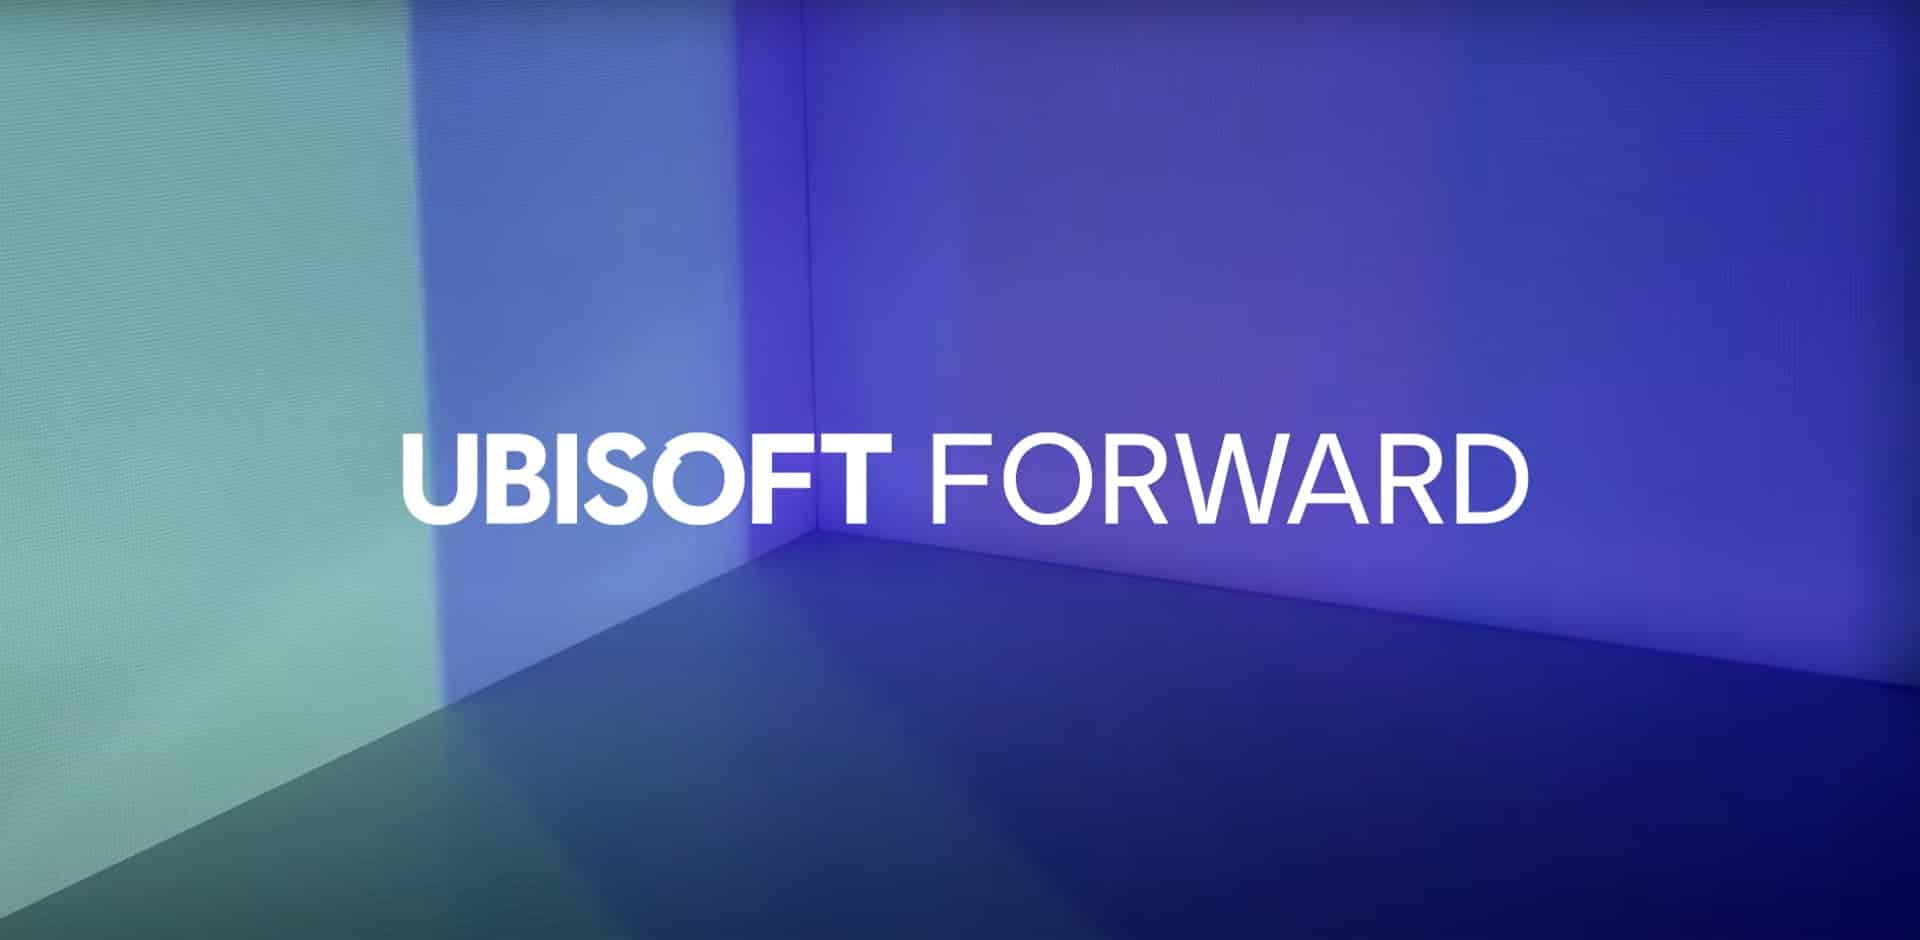 Ubisoft Forward Far Cry 6 E3 2021, Riders Republic,